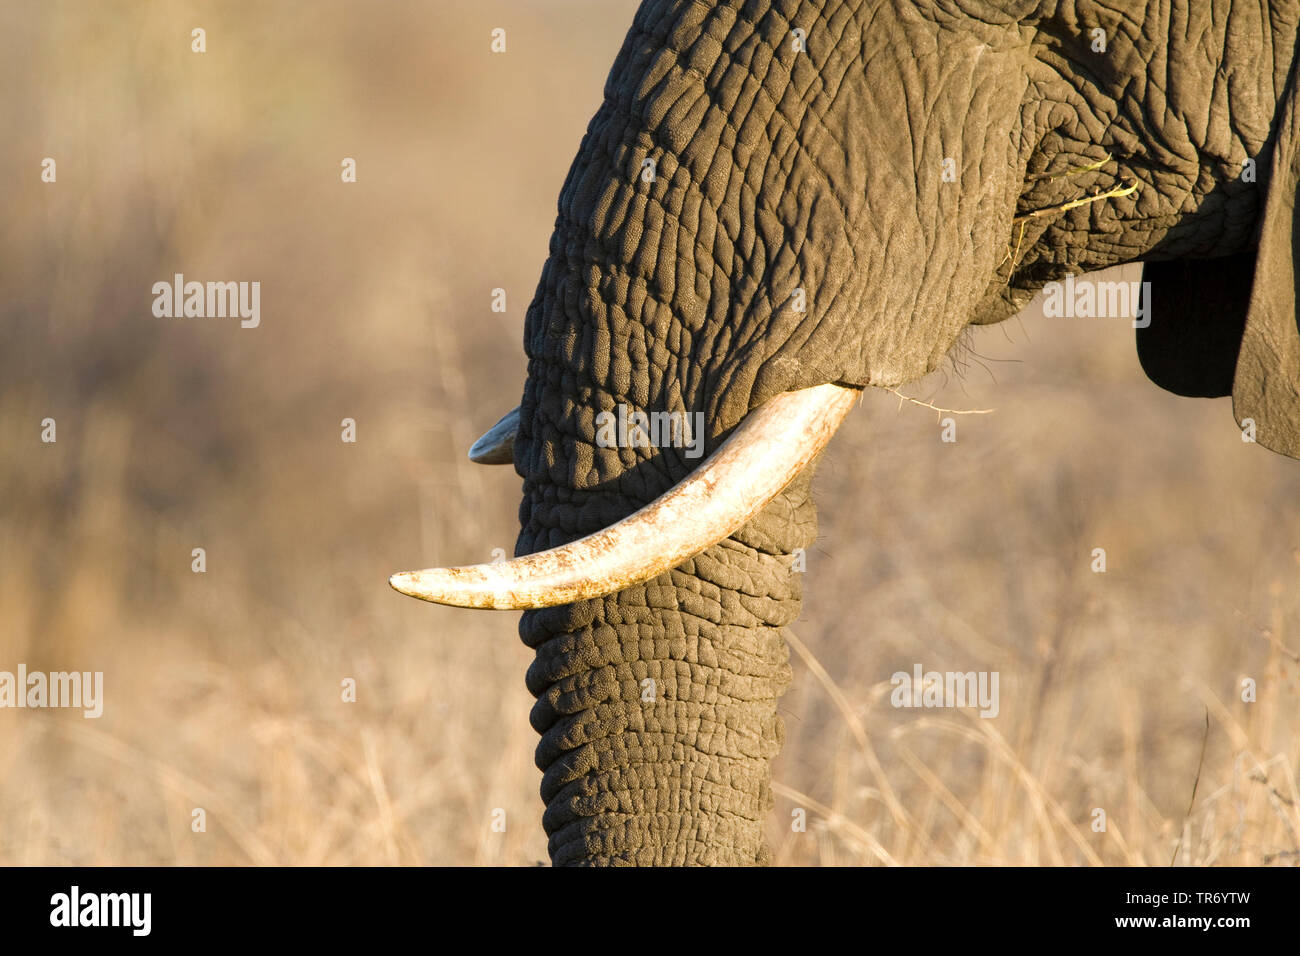 Afrikanischer Elefant (Loxodonta africana), Leitungsbündel und Lumb, Südafrika, Krüger National Park Stockfoto